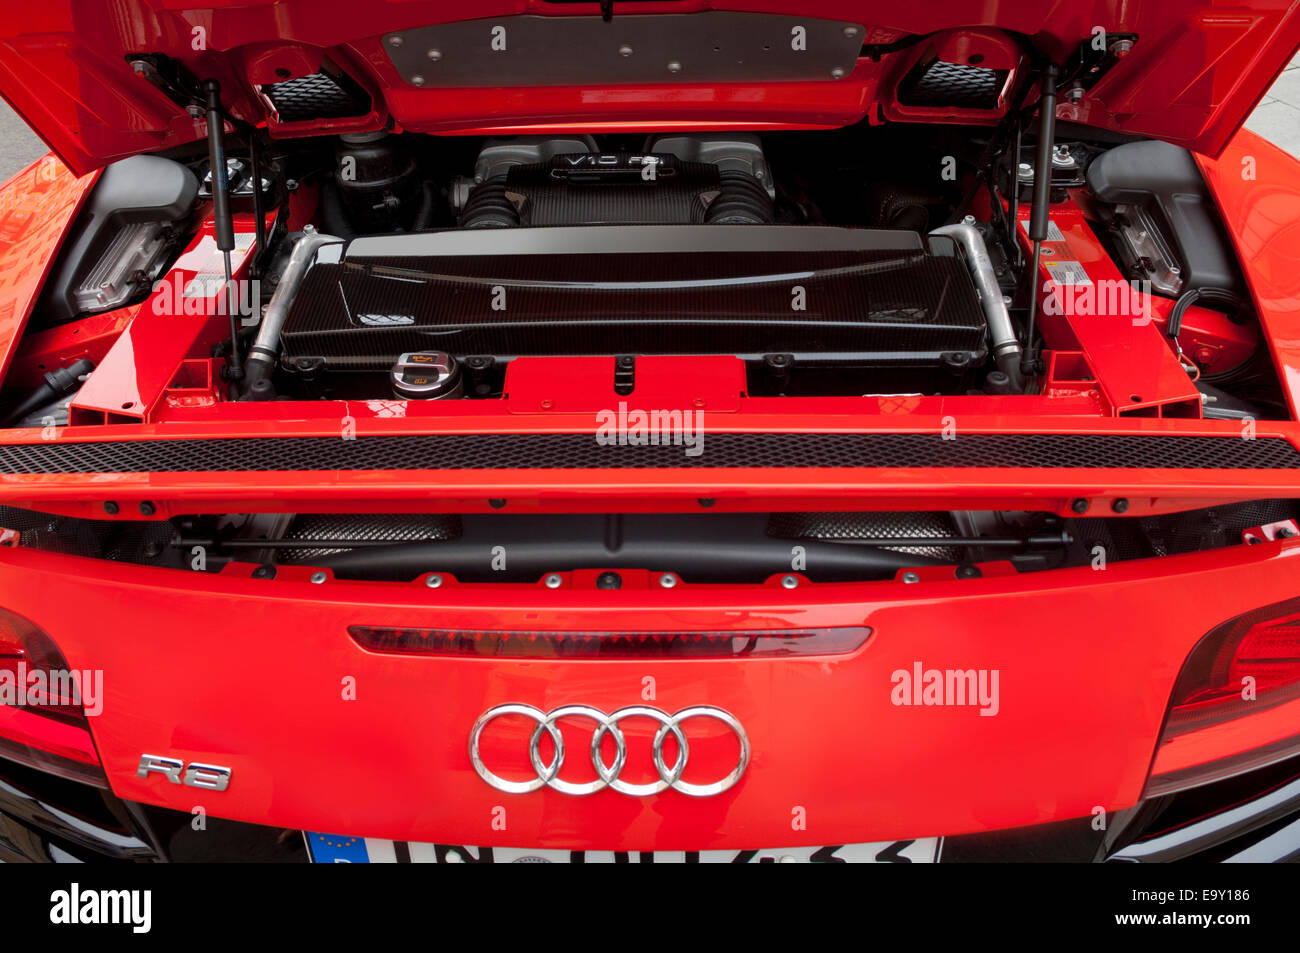 Audi R8, MOTORE V10, aperto del vano motore Foto stock - Alamy